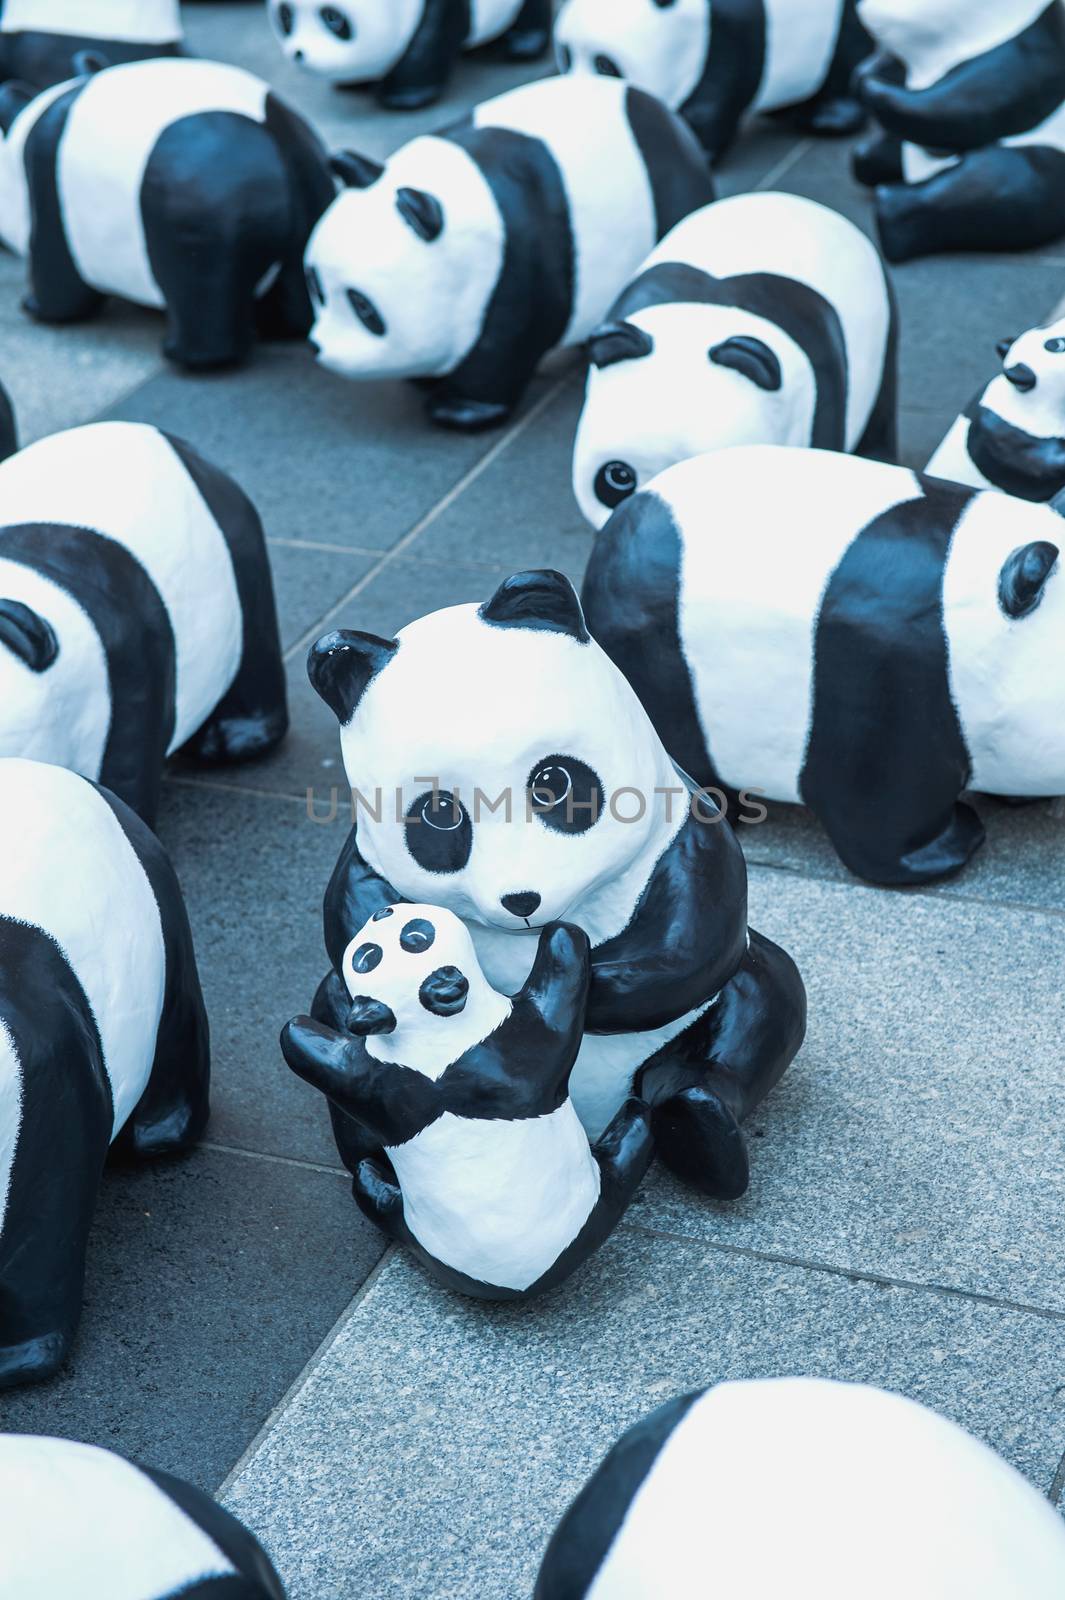 panda sculptures. by gutarphotoghaphy